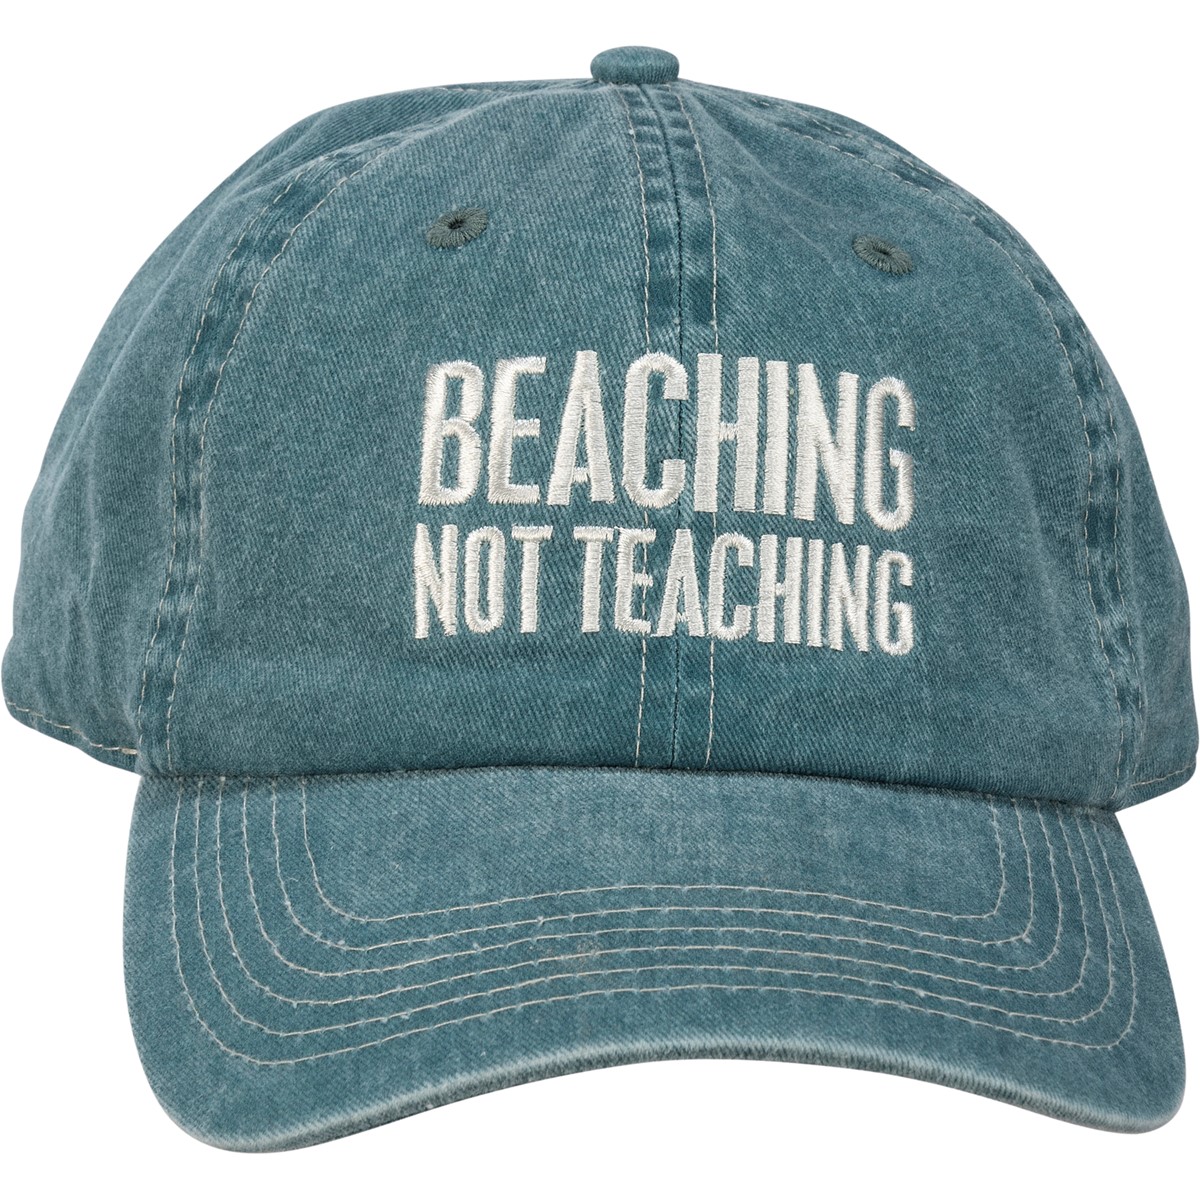 Baseball Cap - Beaching Not Teaching - One Size Fits Most - Cotton, Metal